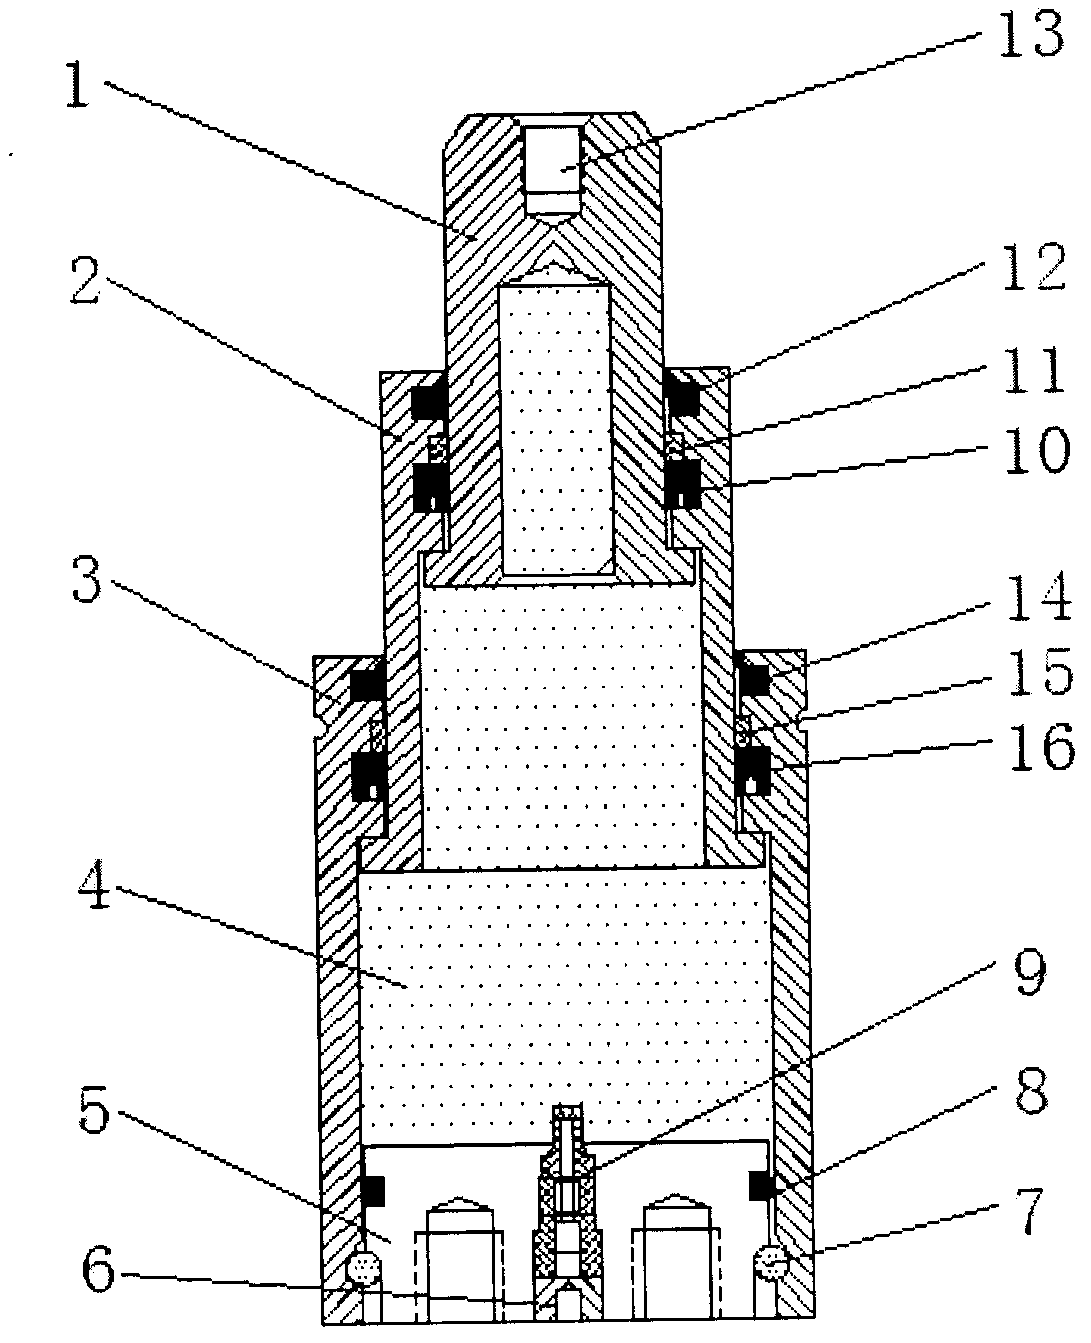 Two-piston-rod or multiple-piston-rod type nitrogen spring